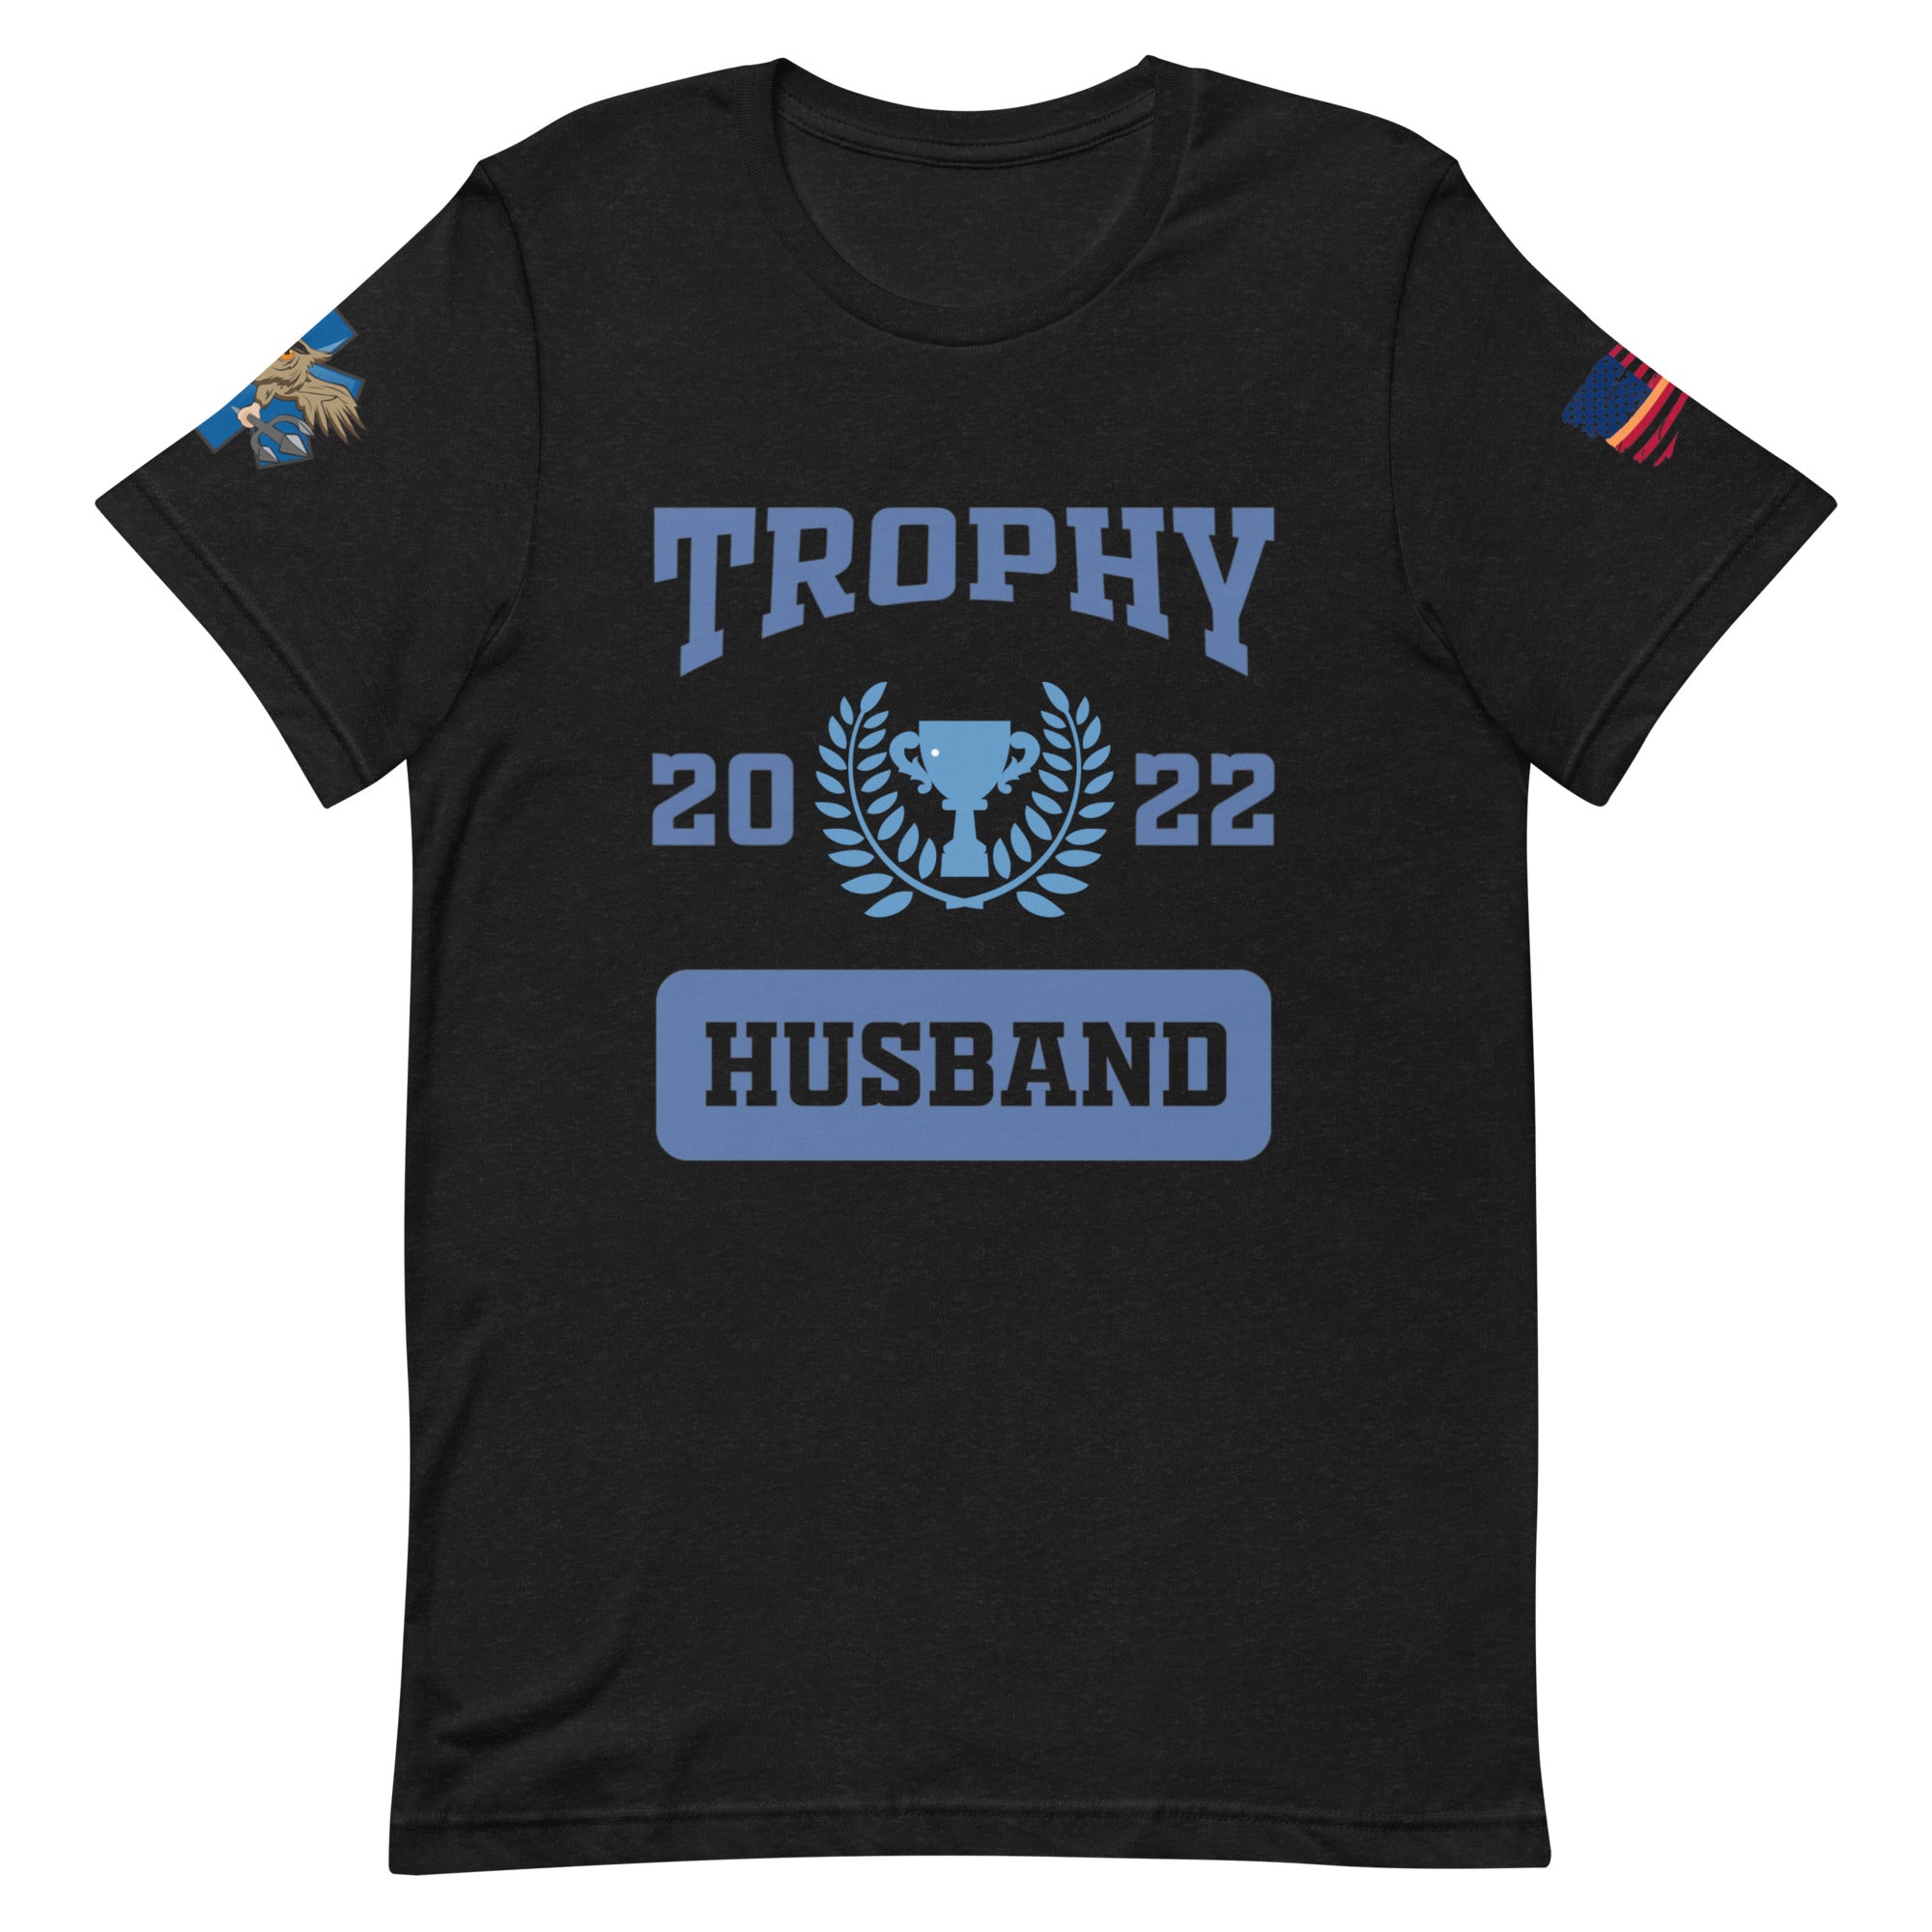 'Trophy Husband' t-shirt